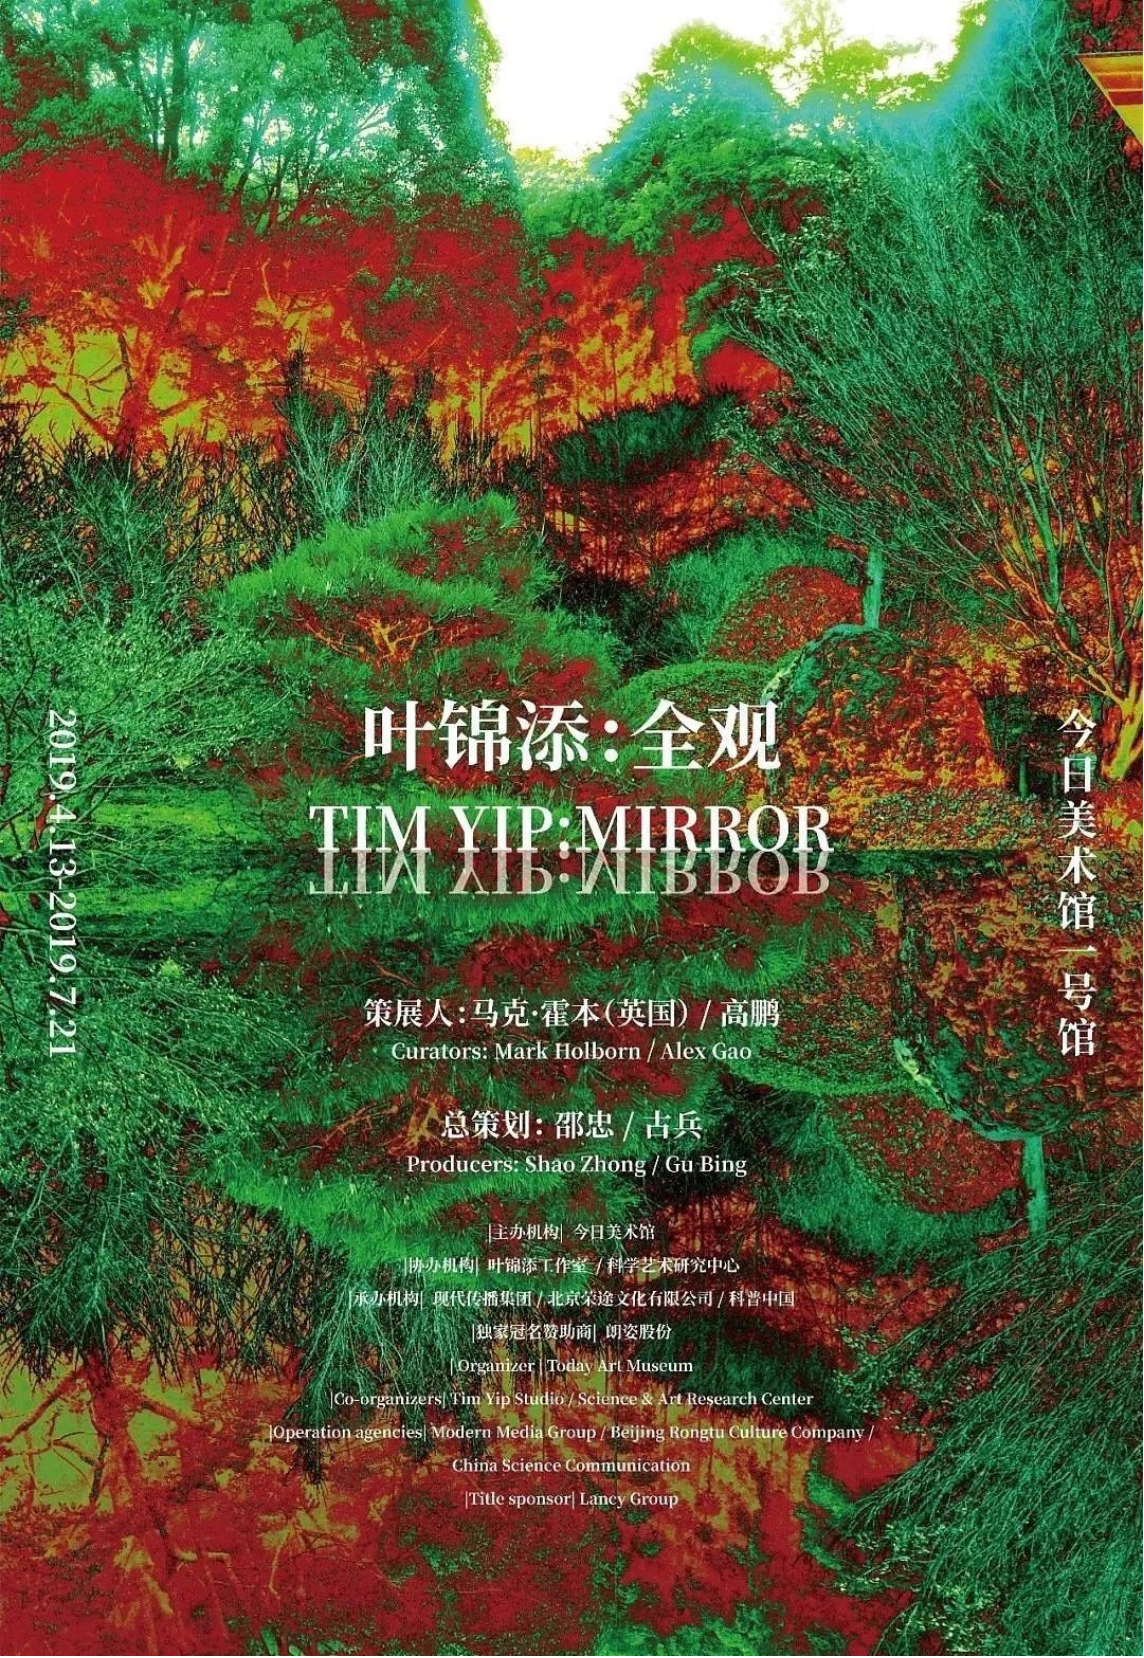 “Mirror”Tim Yip Solo Exhibition